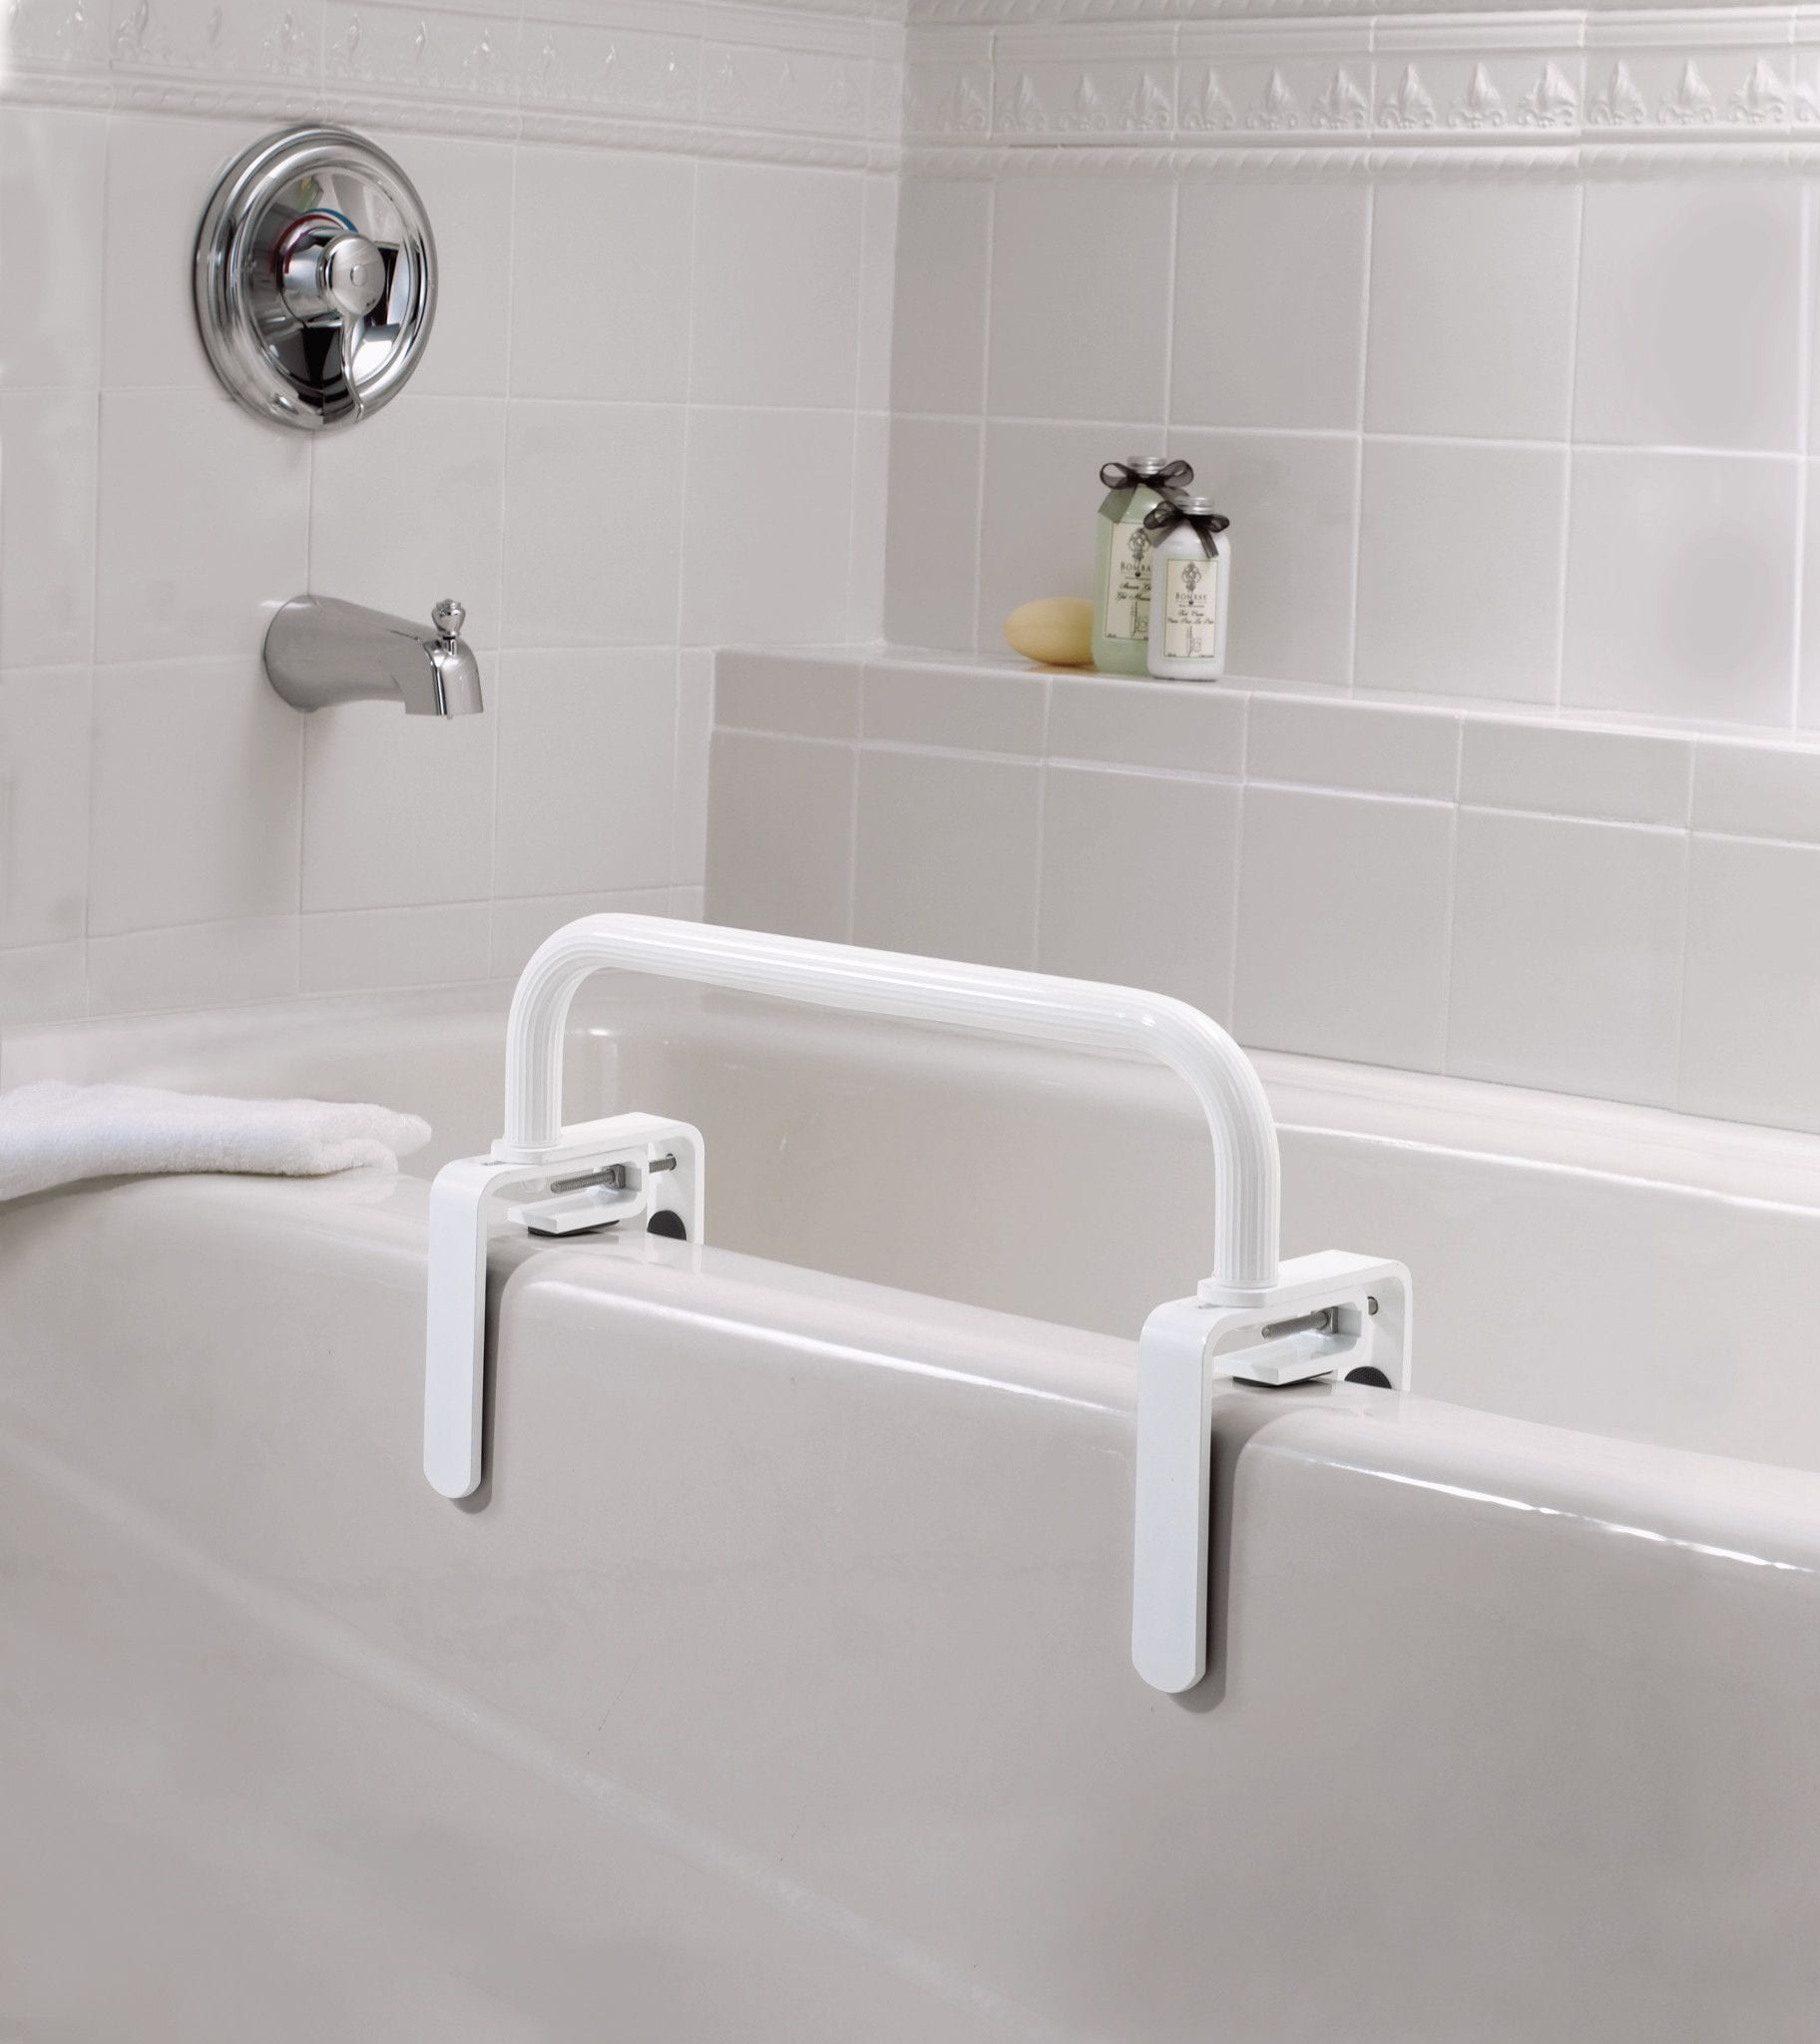 Moen Glacier Tub Grip for added Bathroom Safety